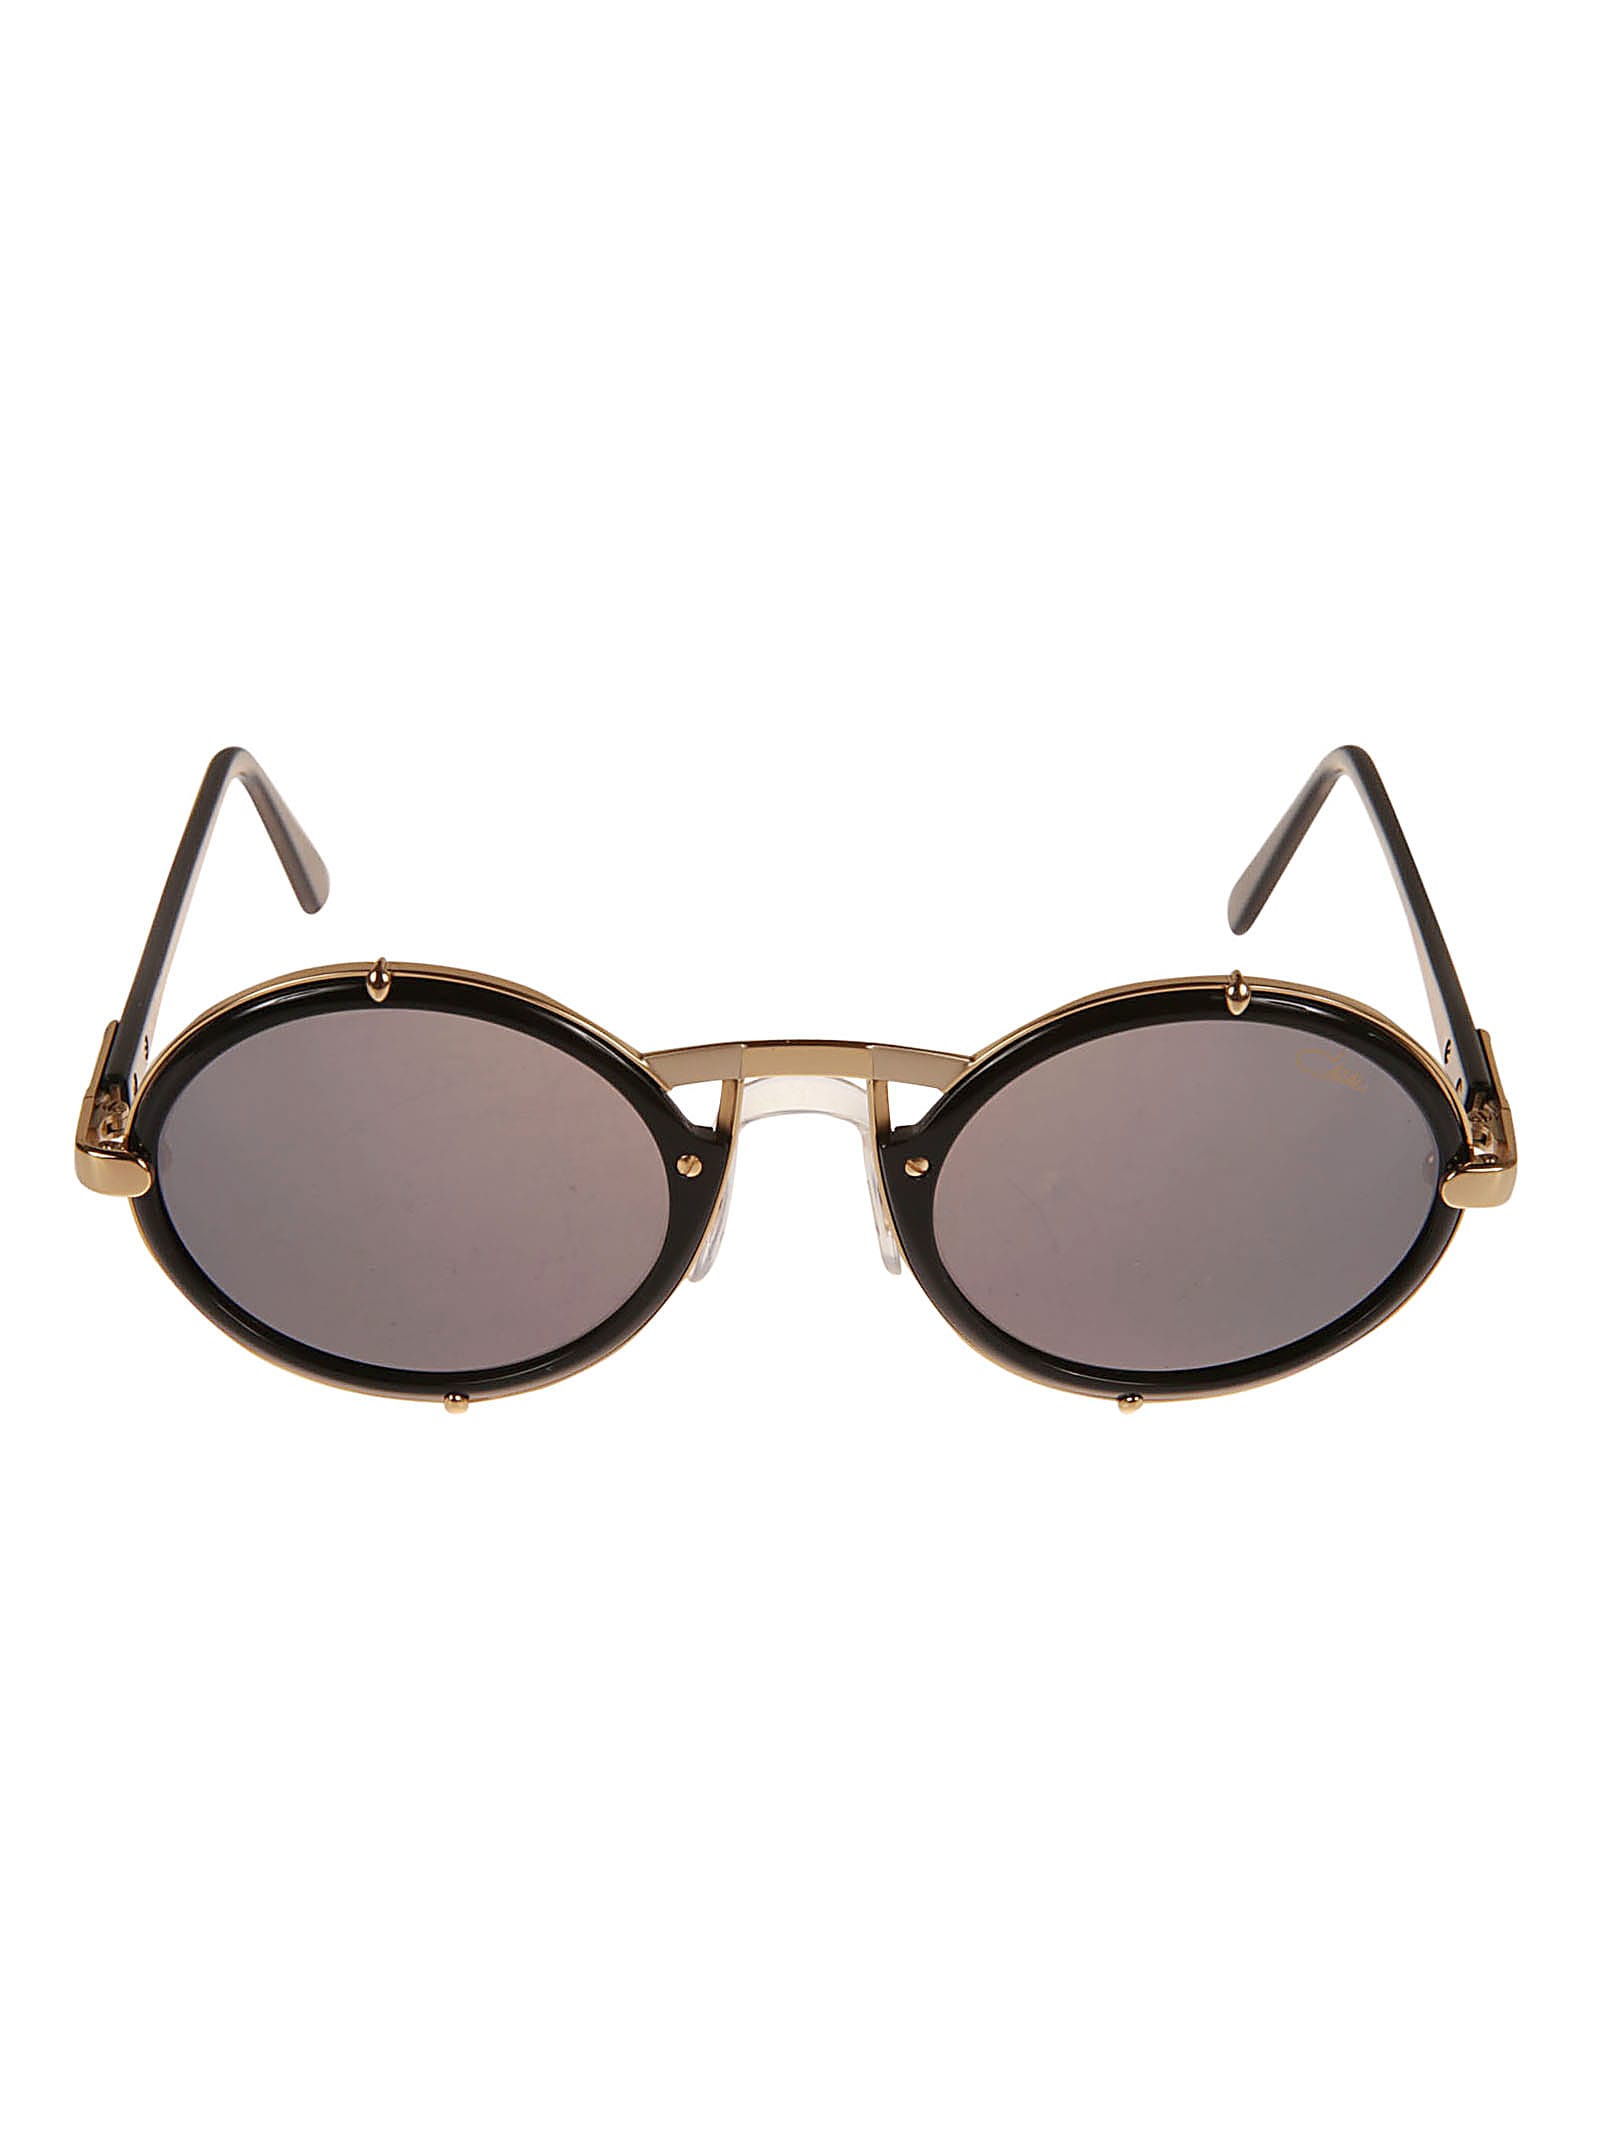 Cazal Round Classic Frame Sunglasses